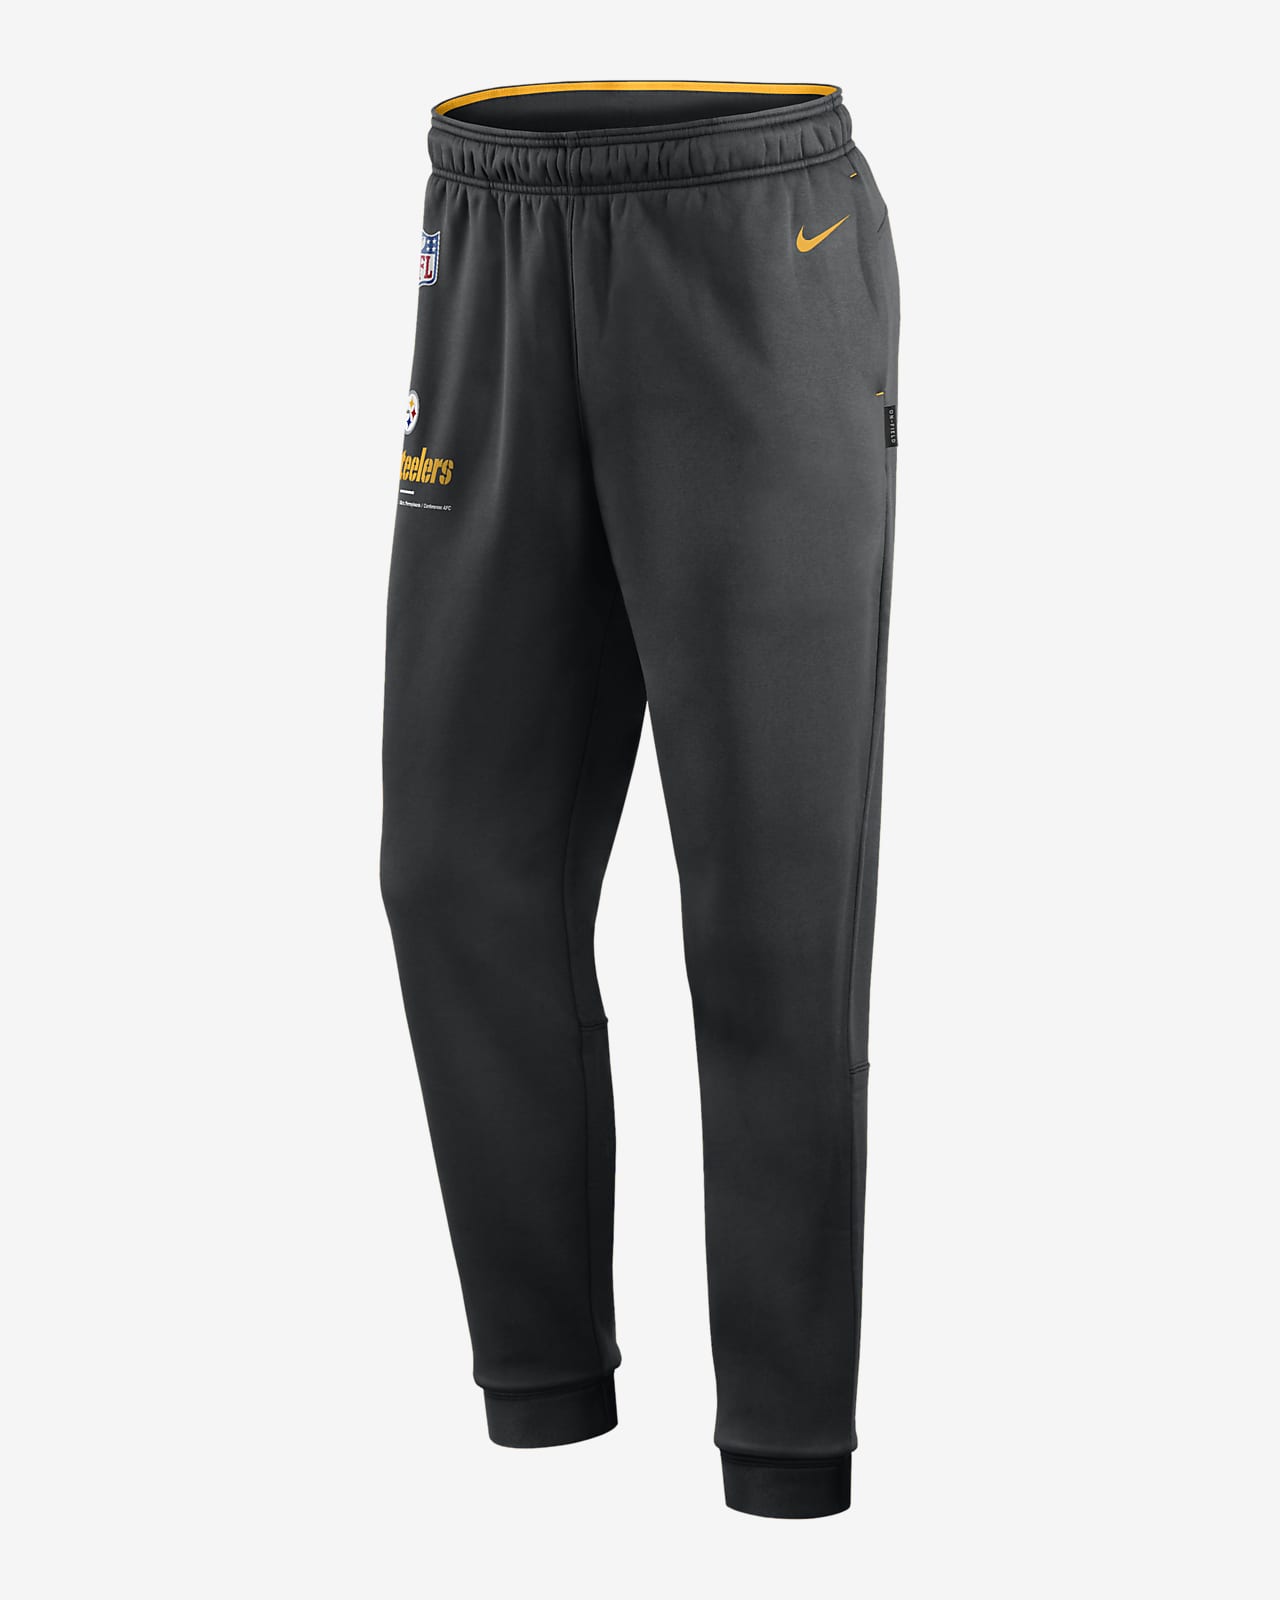 Pantalon Femme Nike ThermaFit Essential Running - Running Warehouse Europe